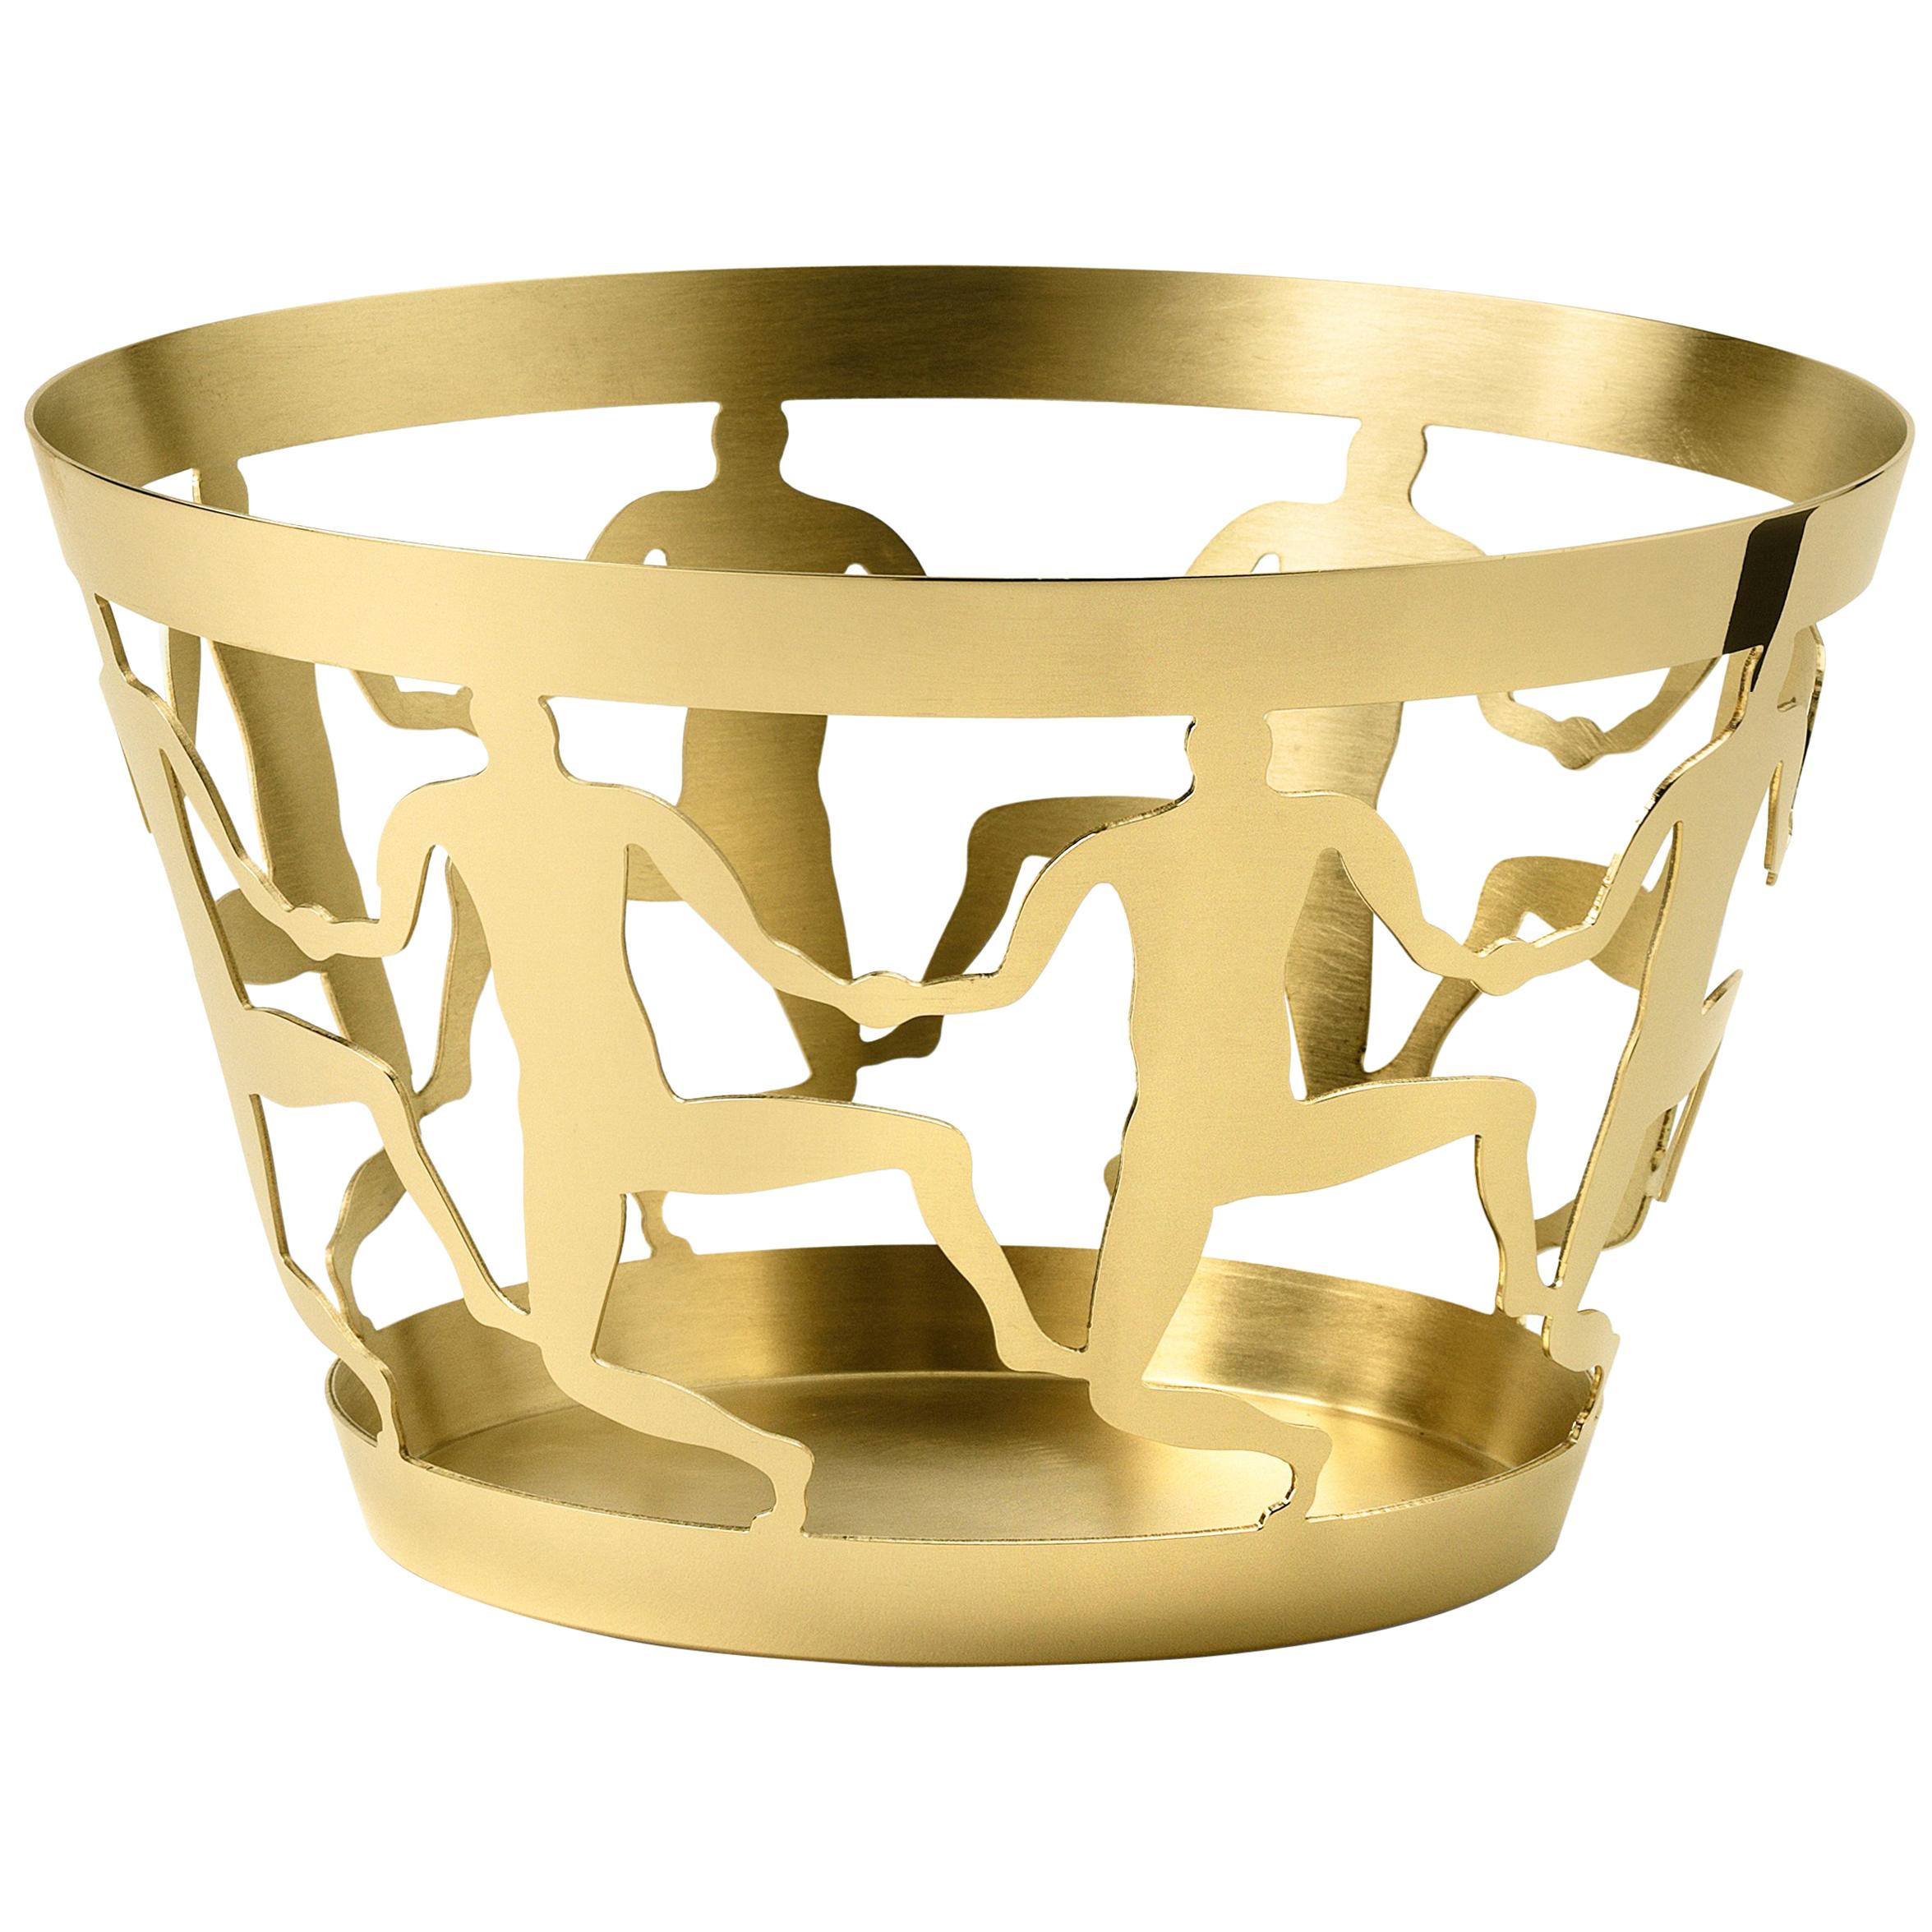 Ghidini 1961 Cestino 1 Medium Bowl in Polished Brass by Andrea Branzi For Sale